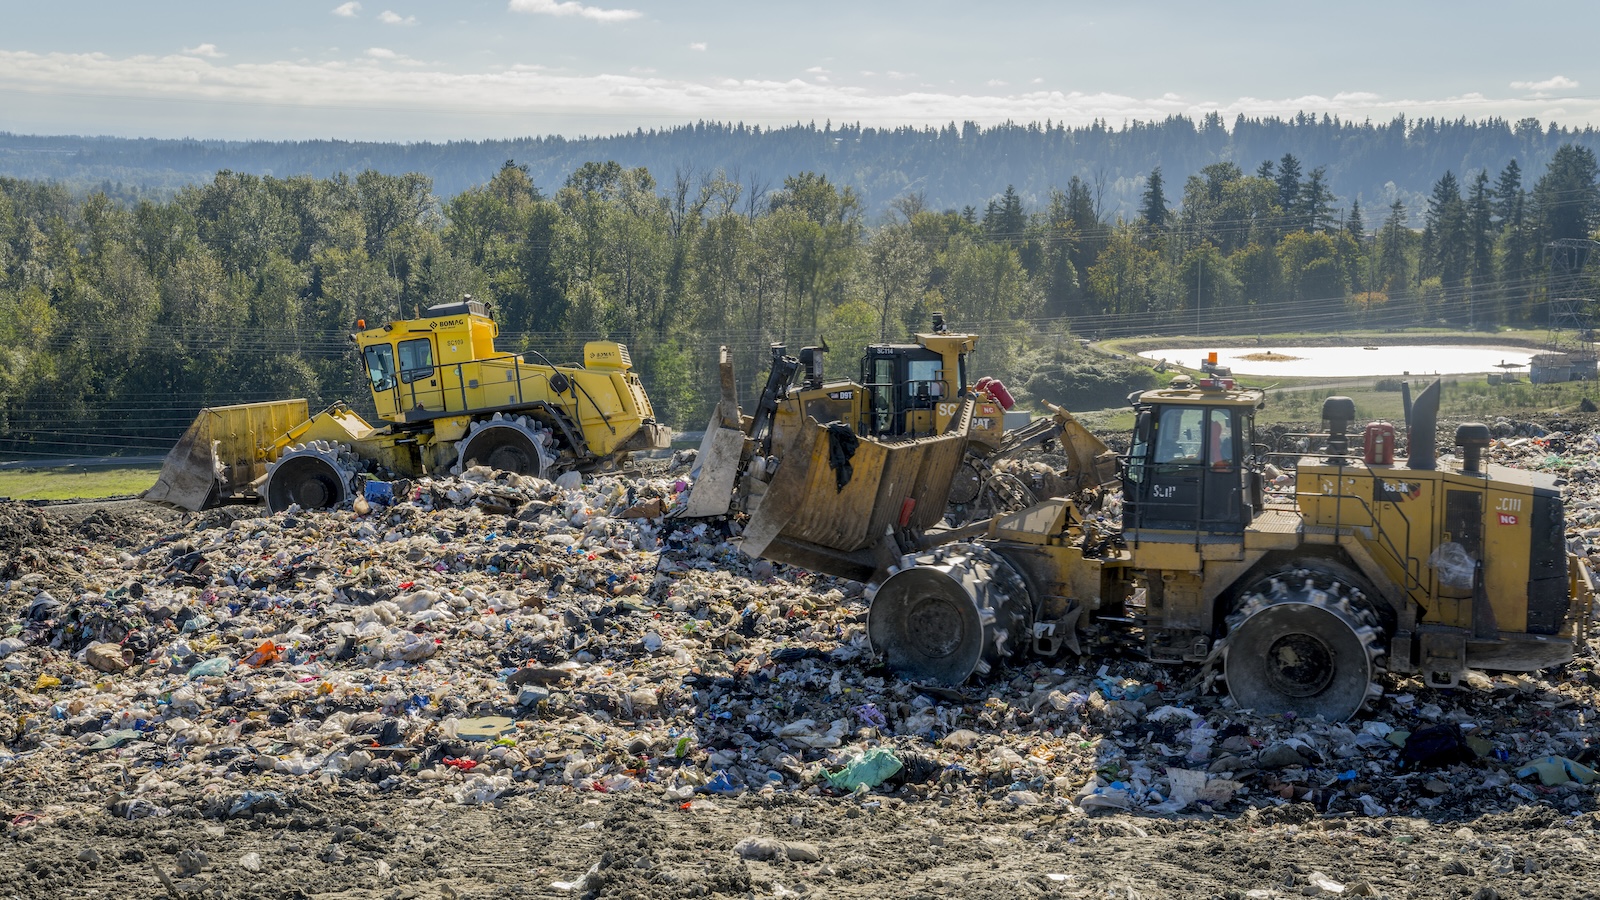 Landfills in Washington and Oregon leaked ‘explosive’ levels of methane last year